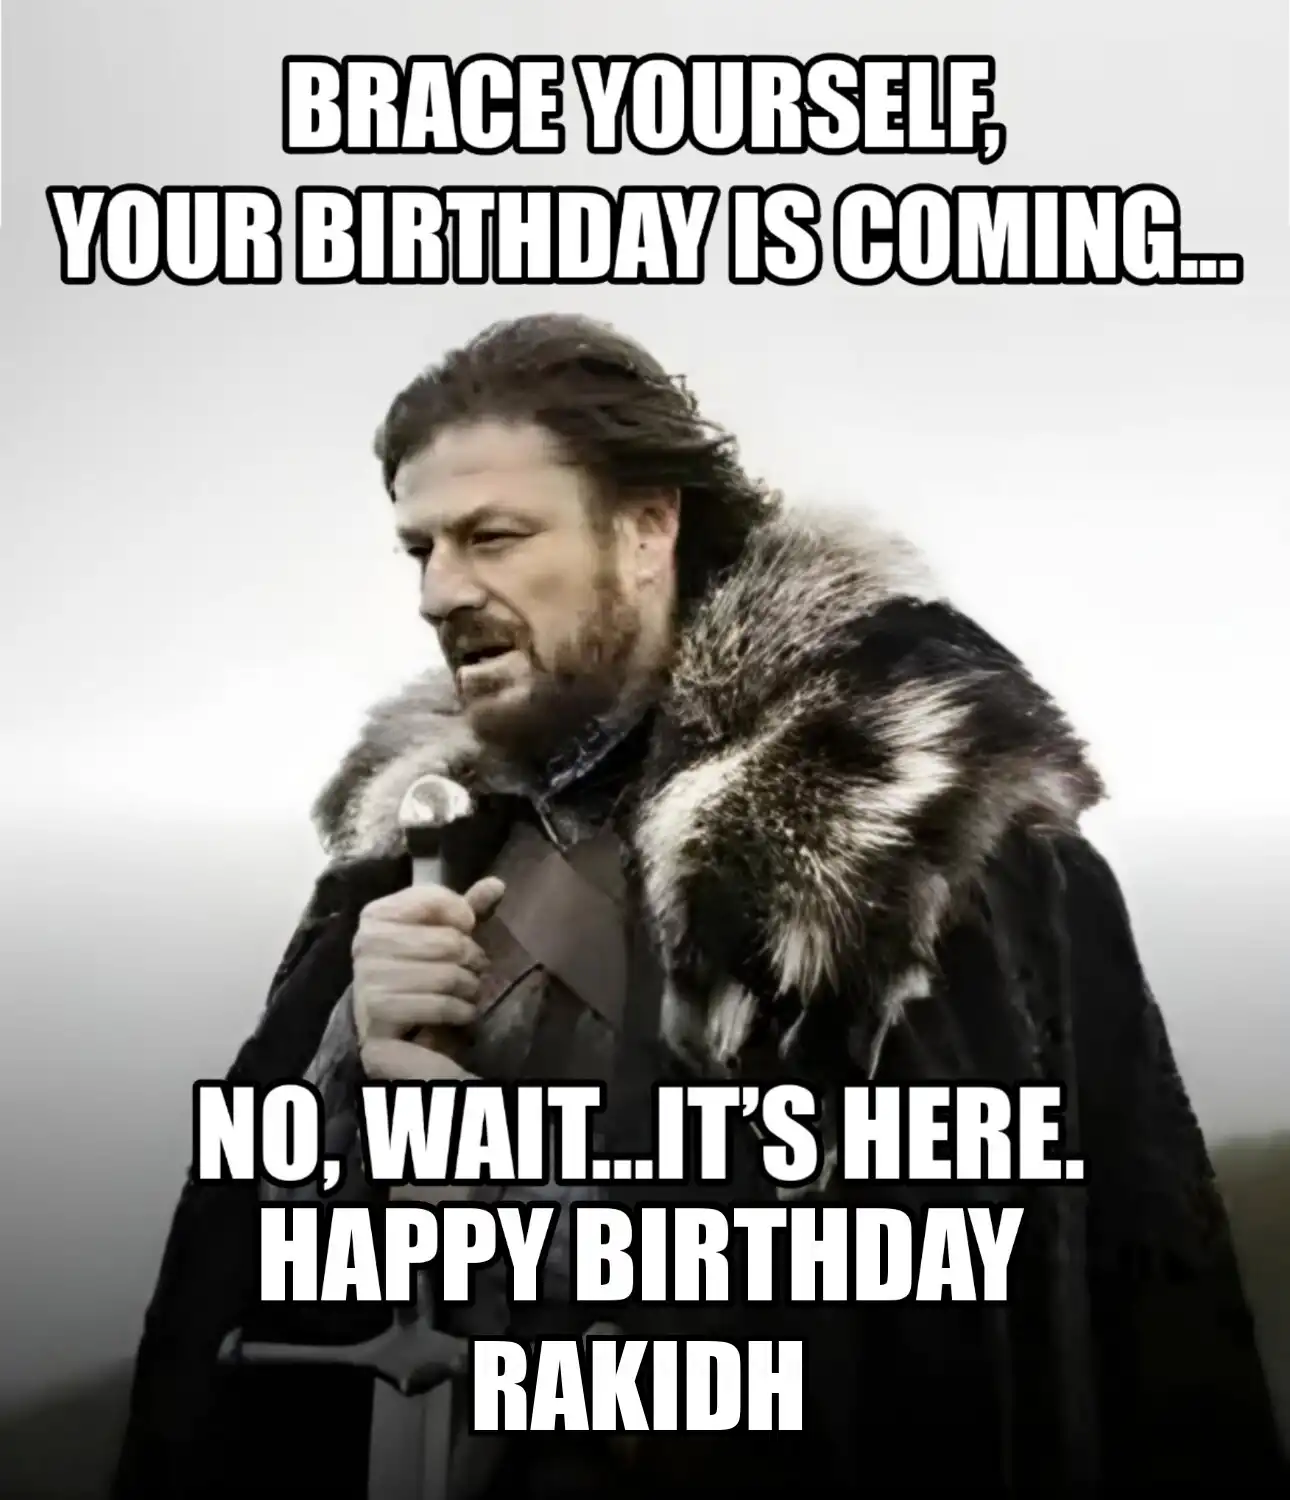 Happy Birthday Rakidh Brace Yourself Your Birthday Is Coming Meme